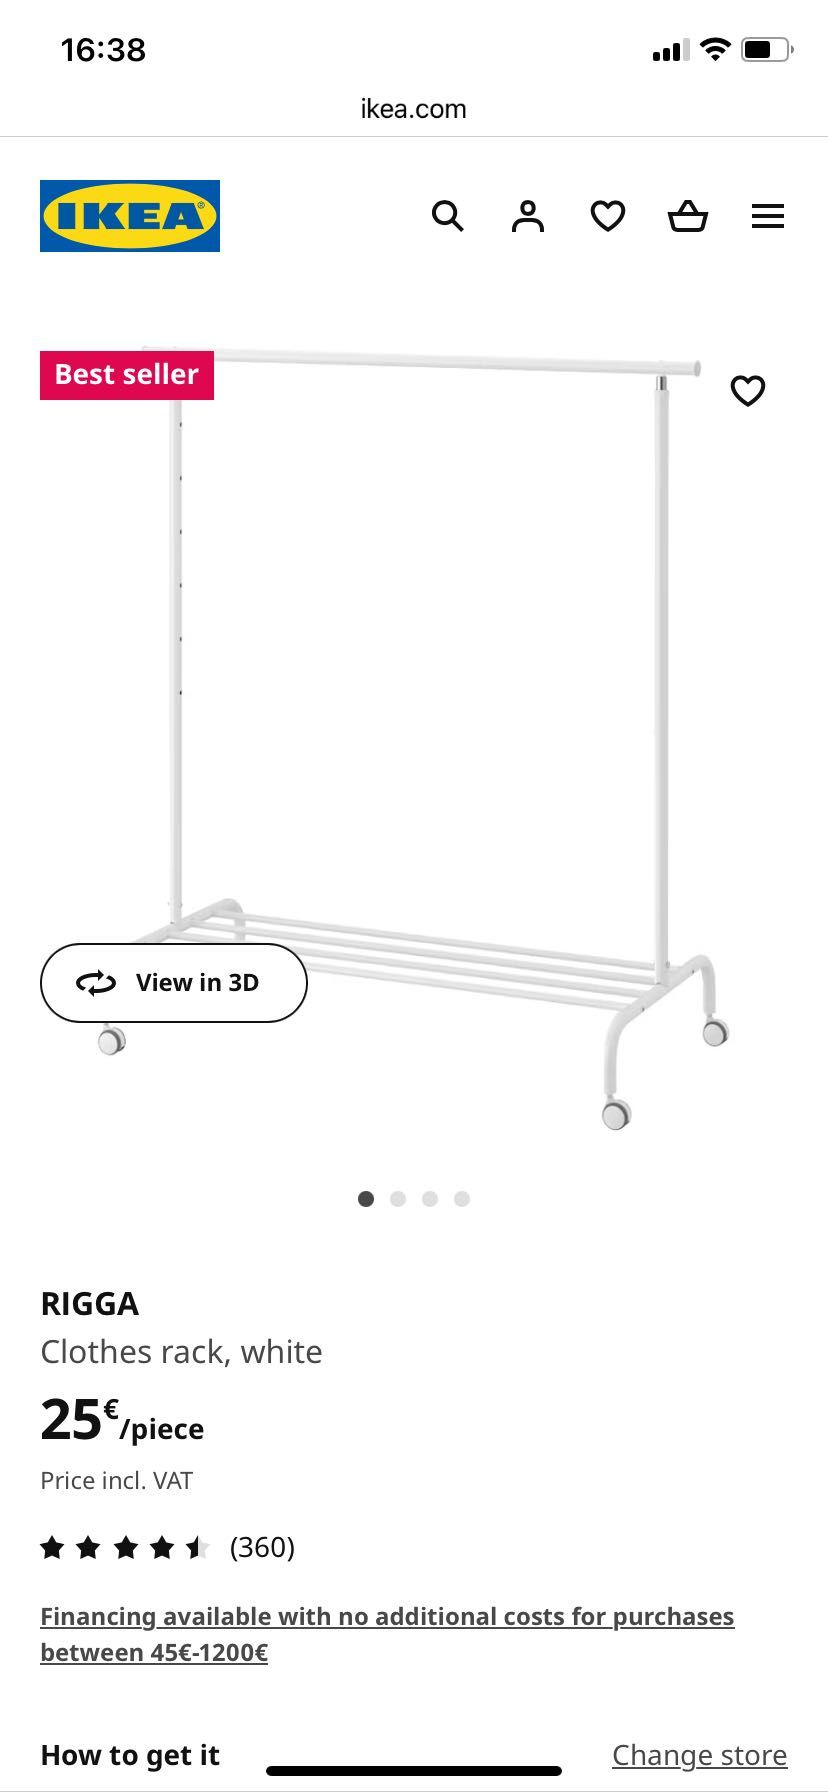 Ikea clothes rack Rigga